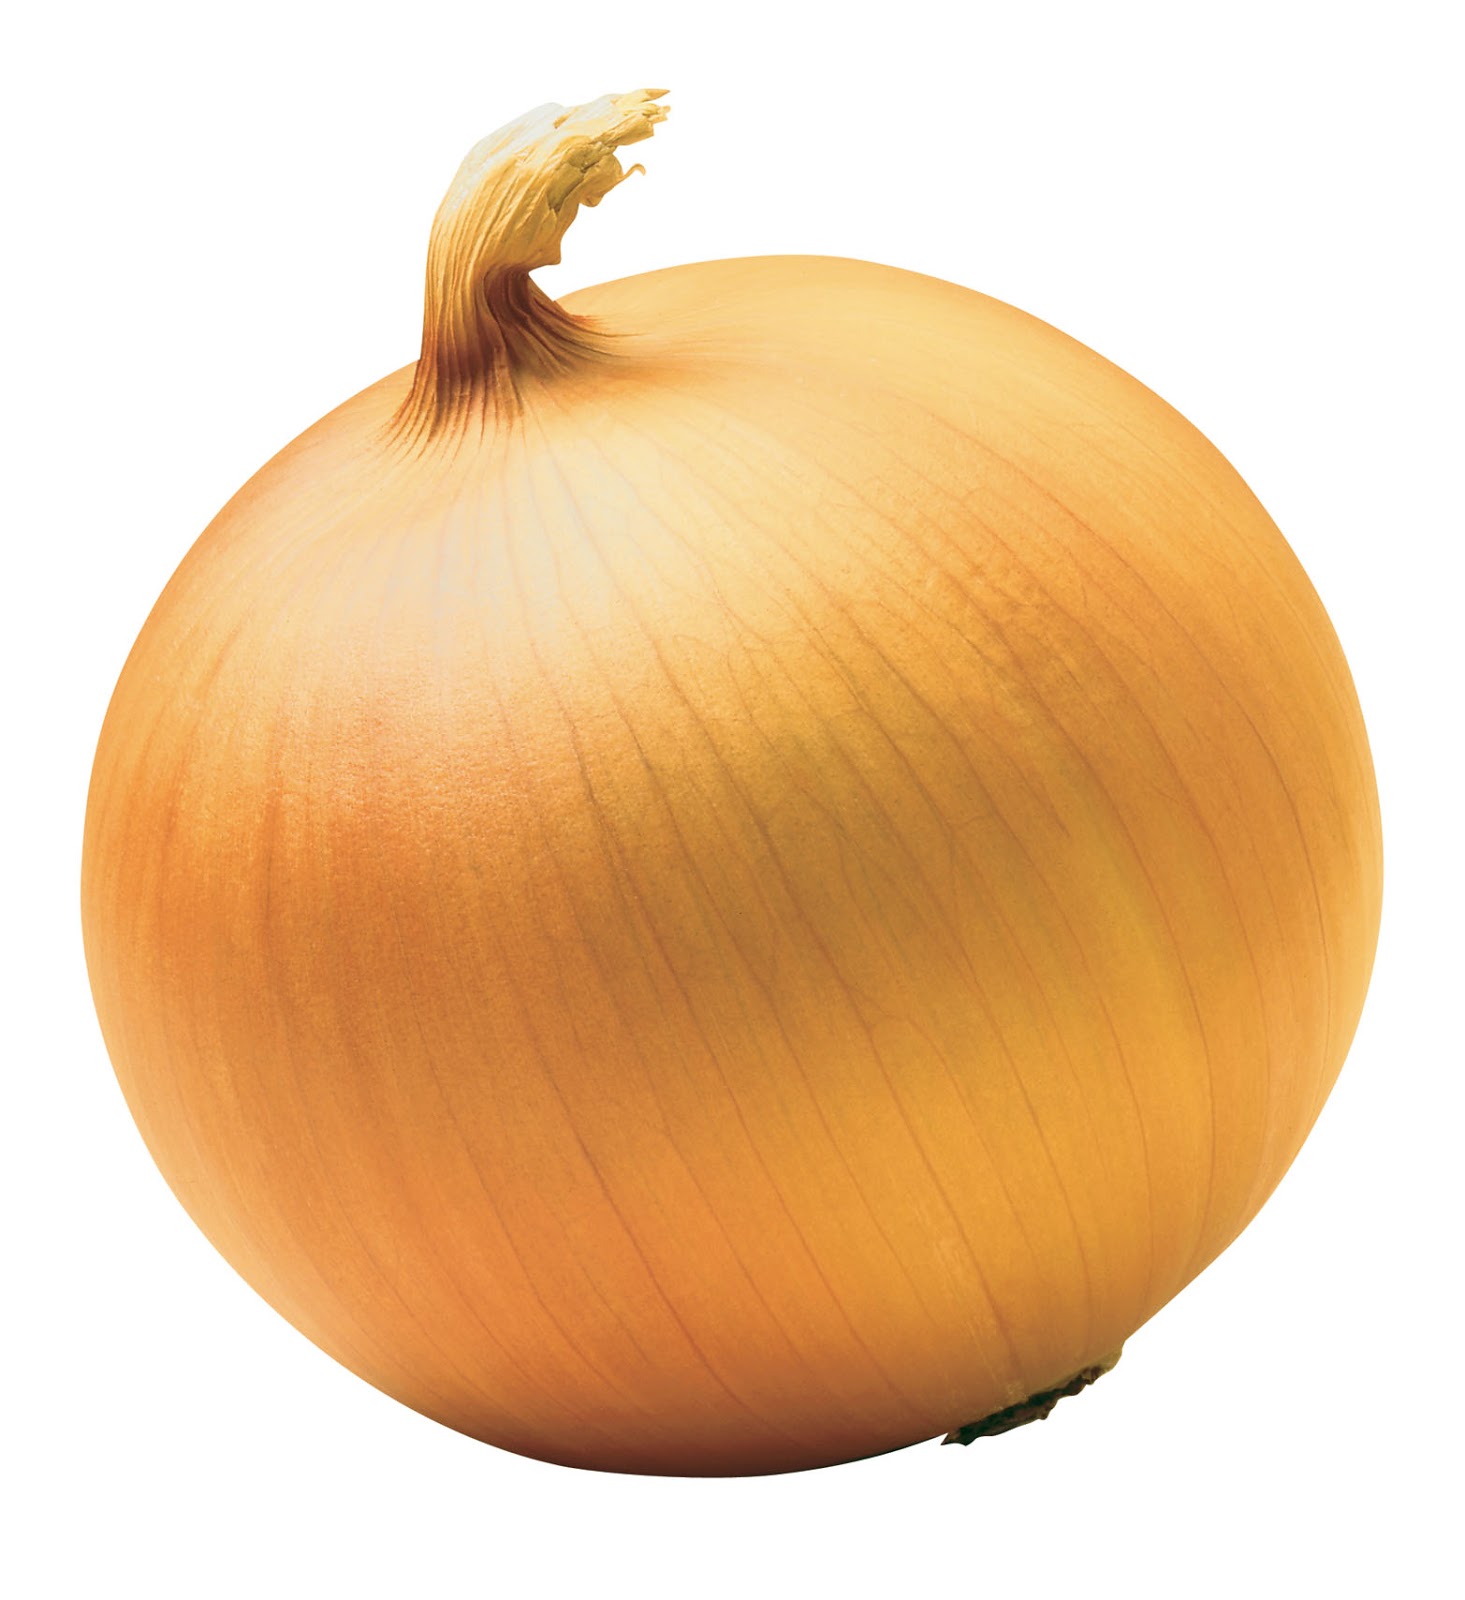 Onion top photo